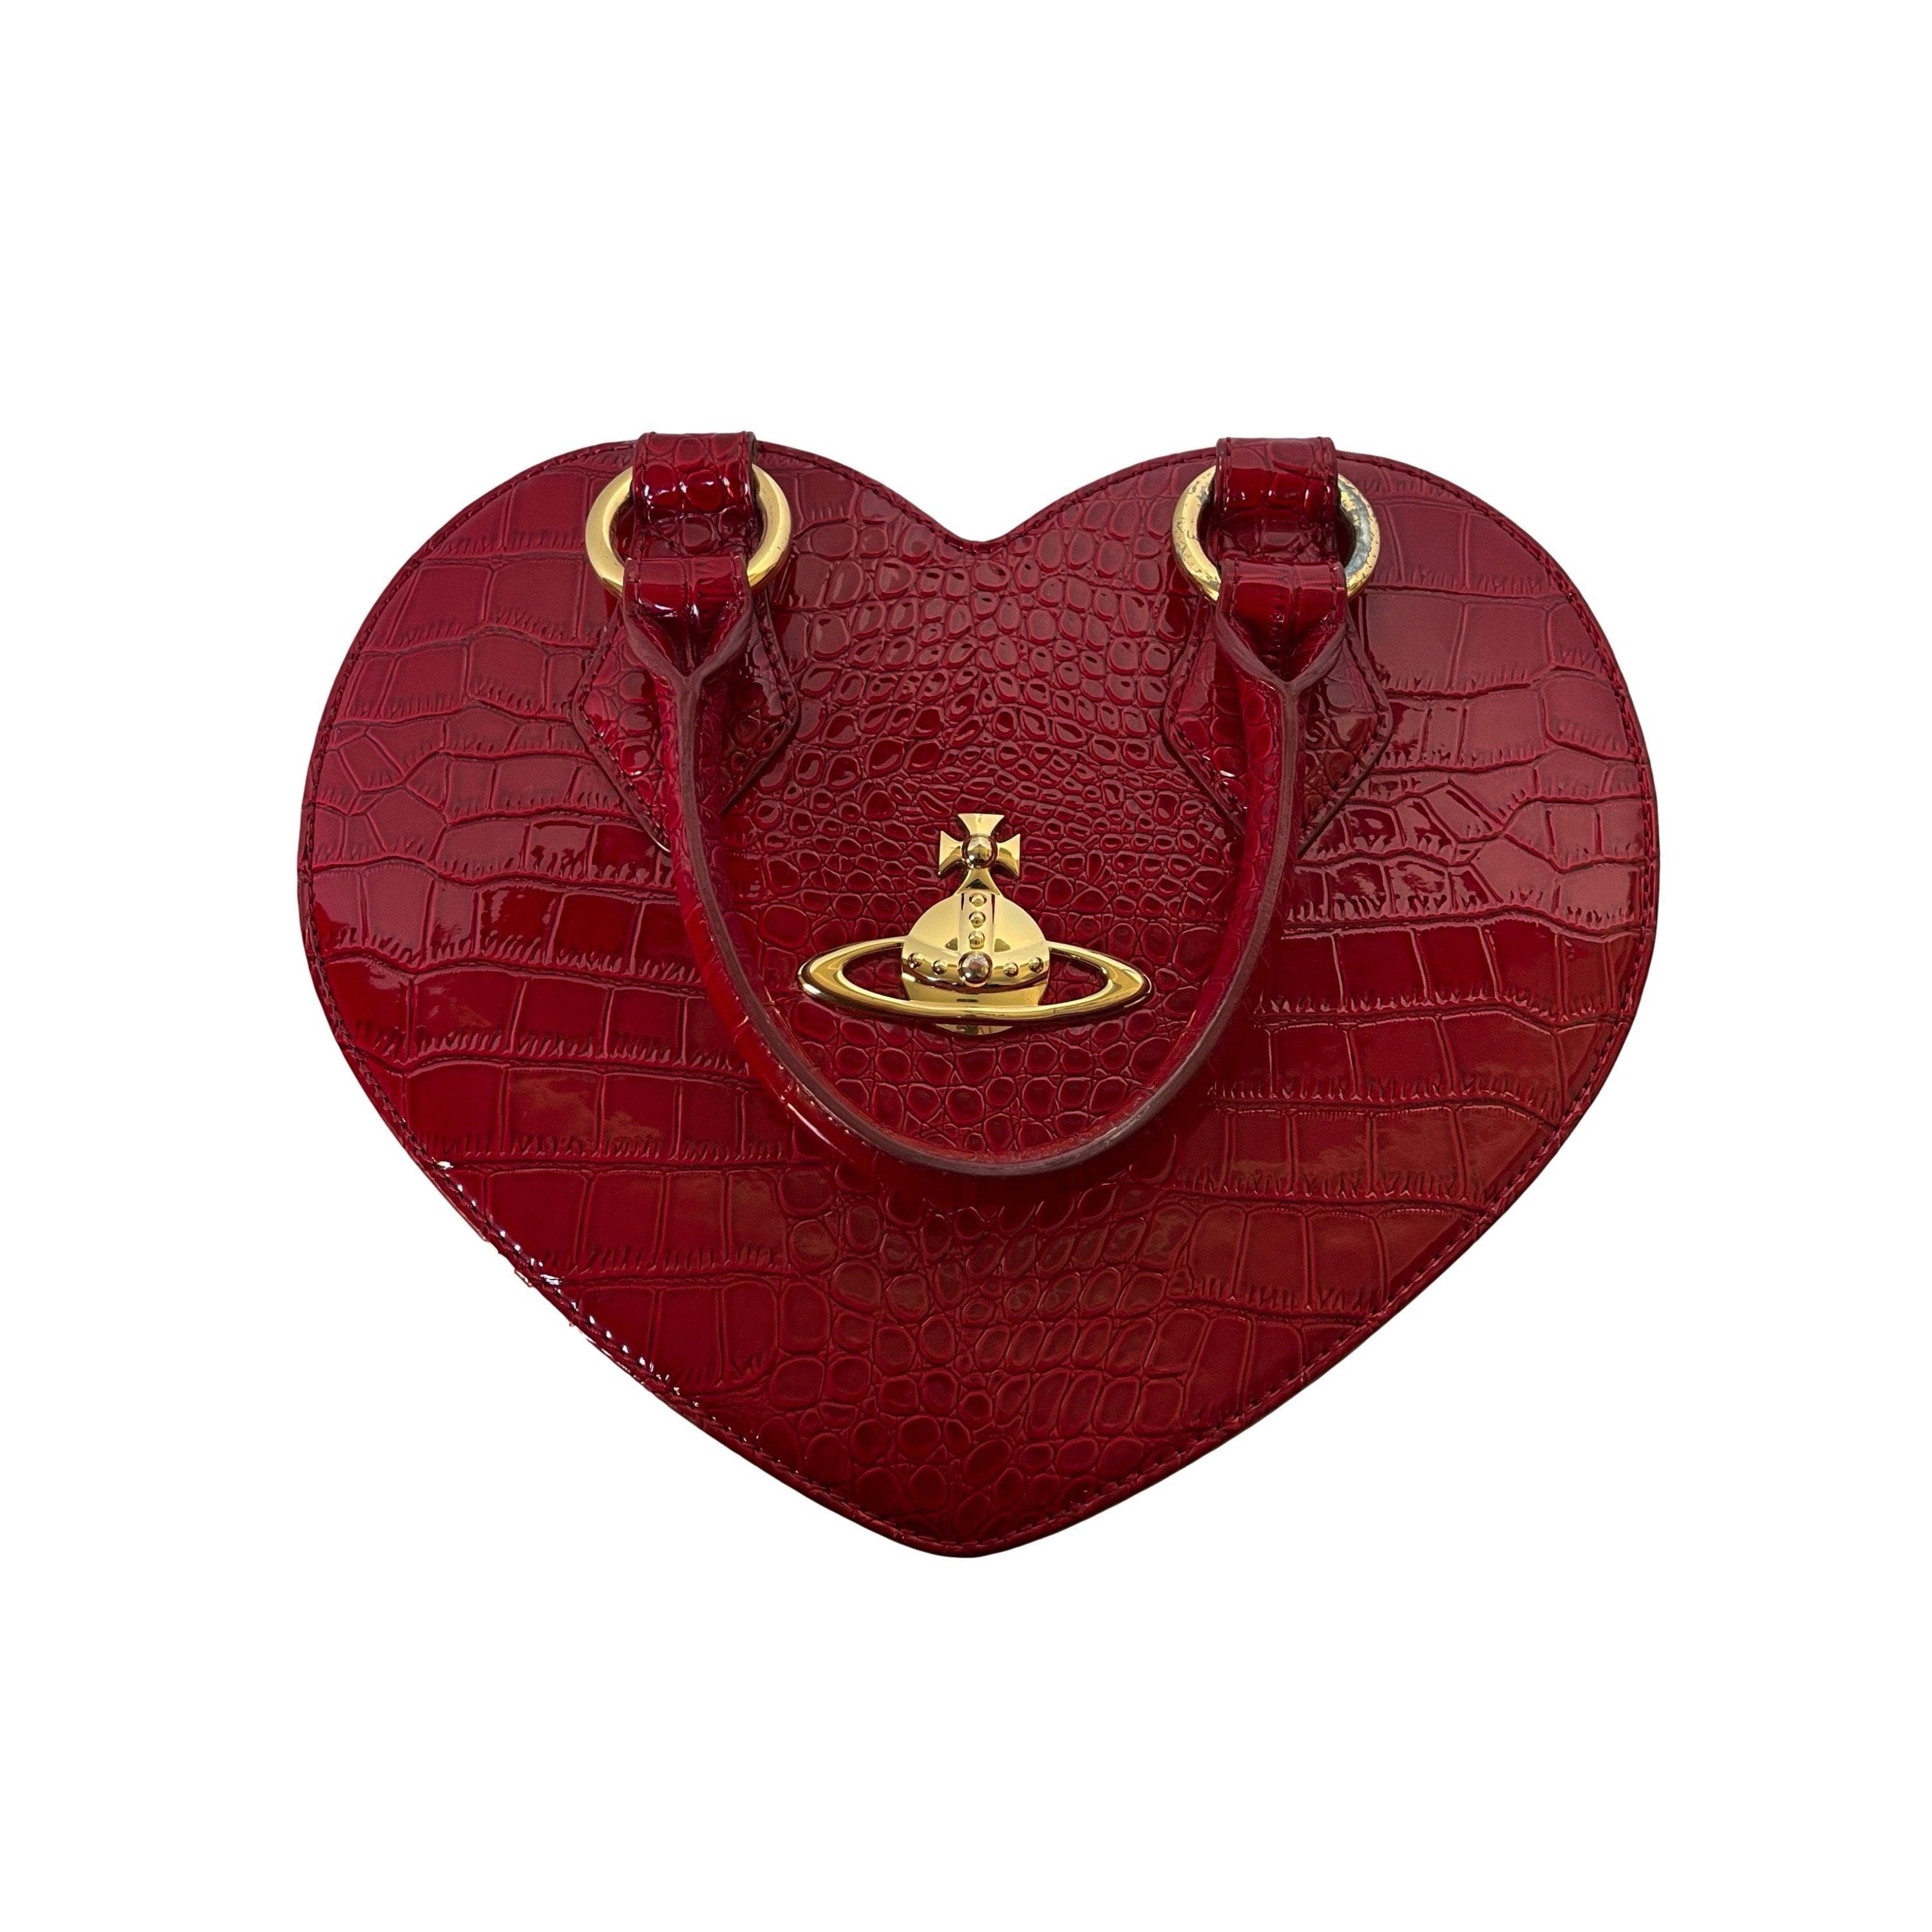 vivienne westwood heart bag red